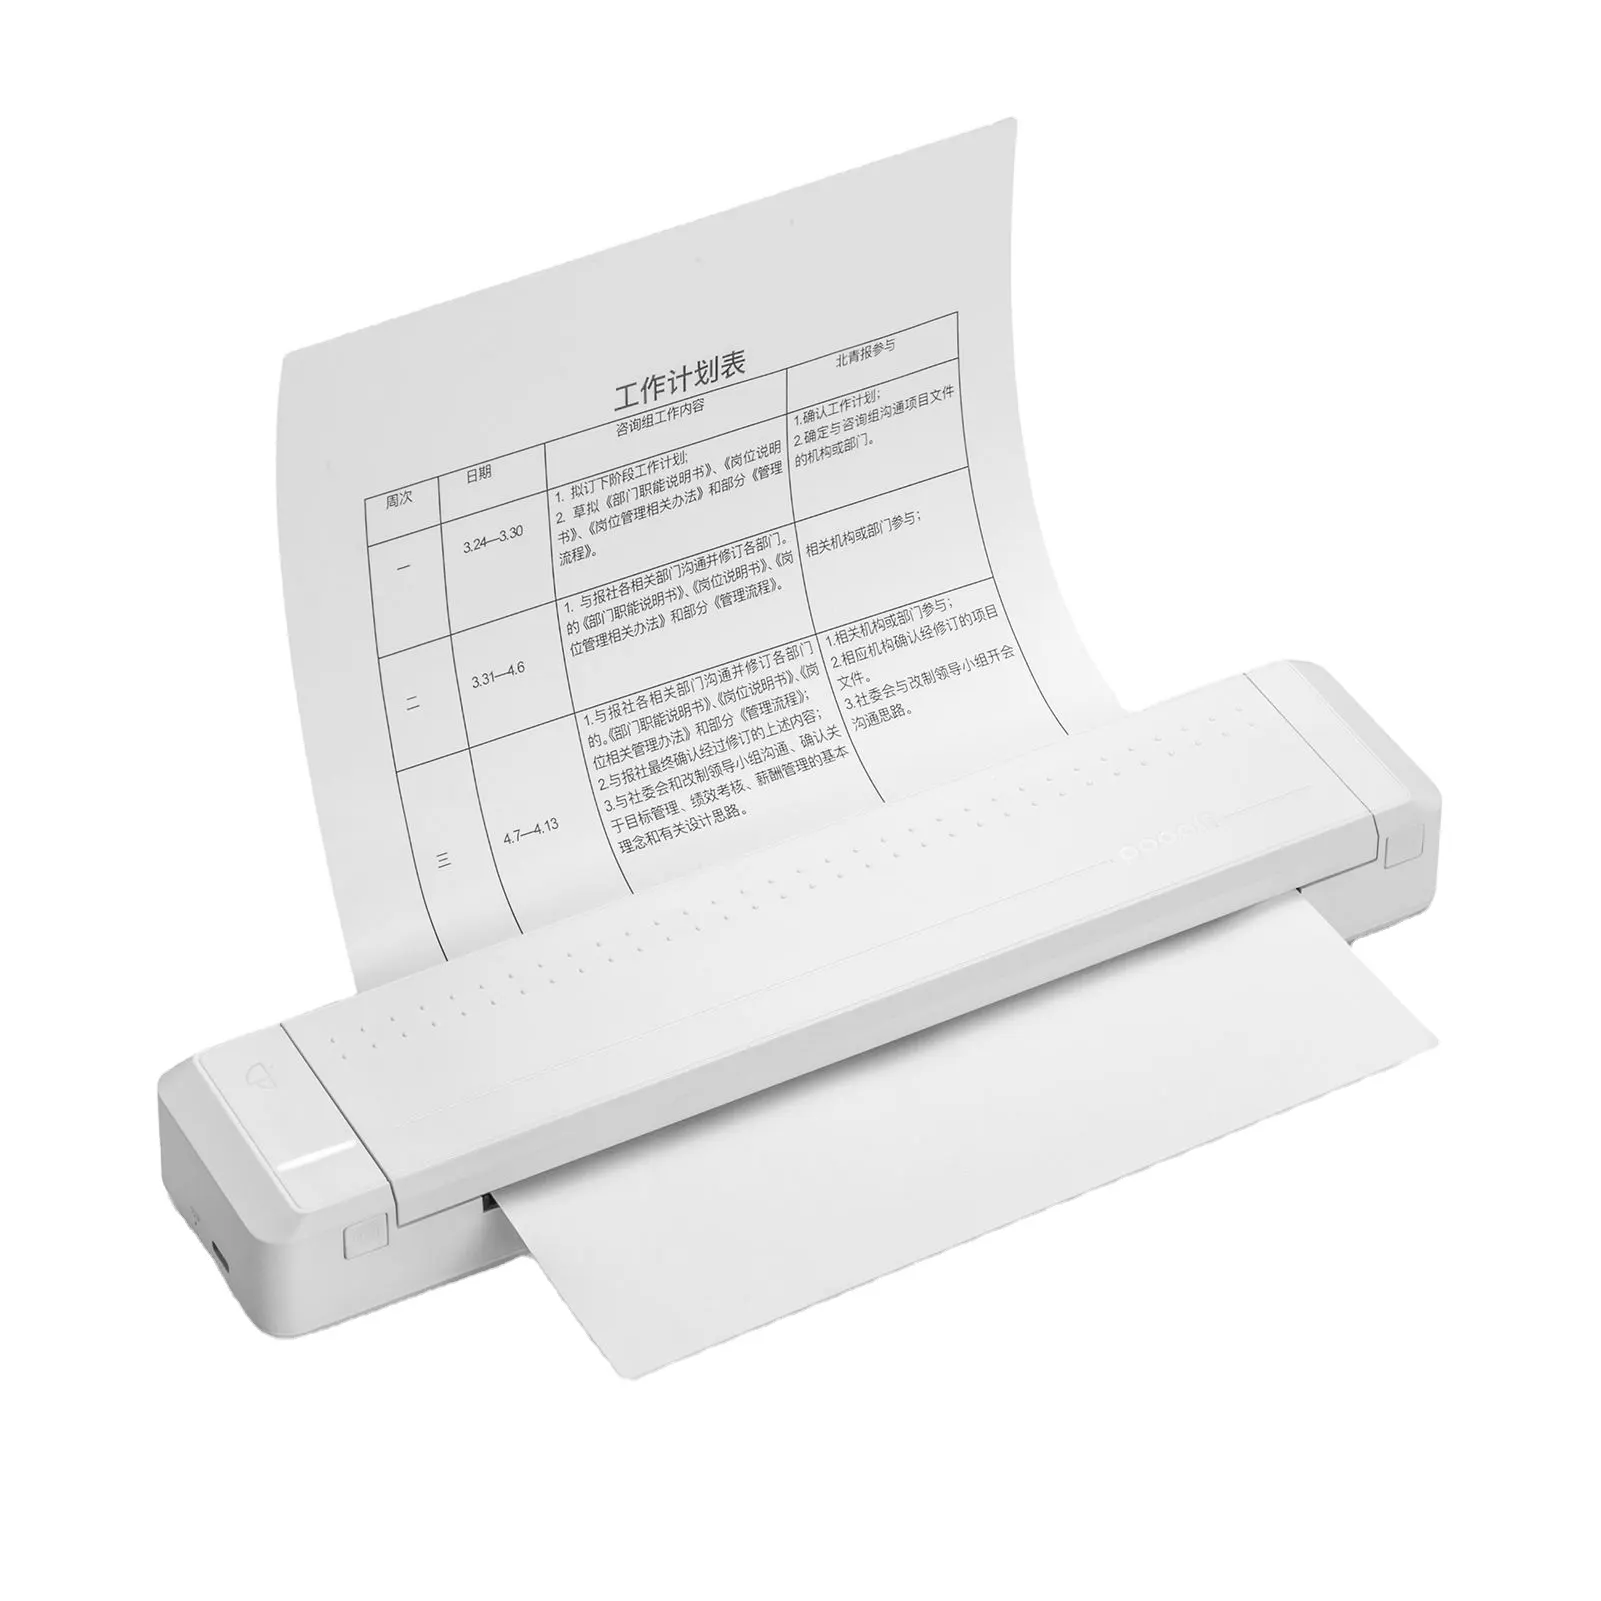 JEPOD-Impresora inalámbrica A4, dispositivo de impresión portátil Mini BT, para fotos y documentos